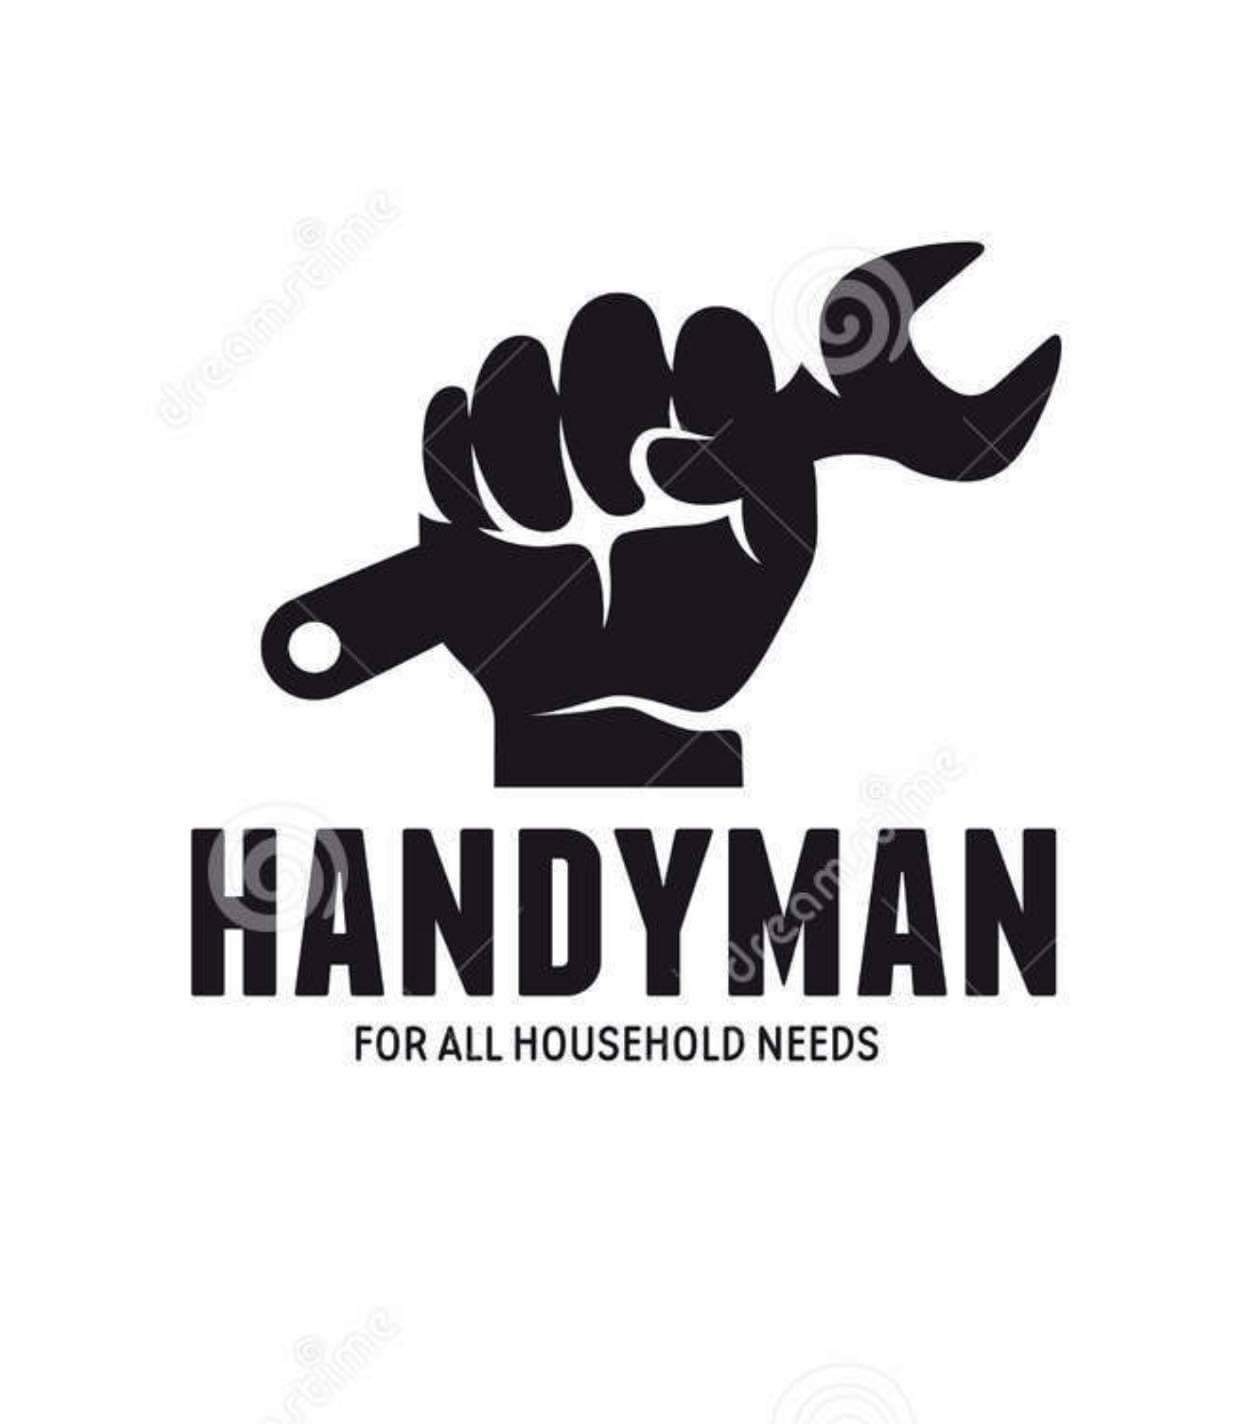 A and G Handyman Home Service Logo